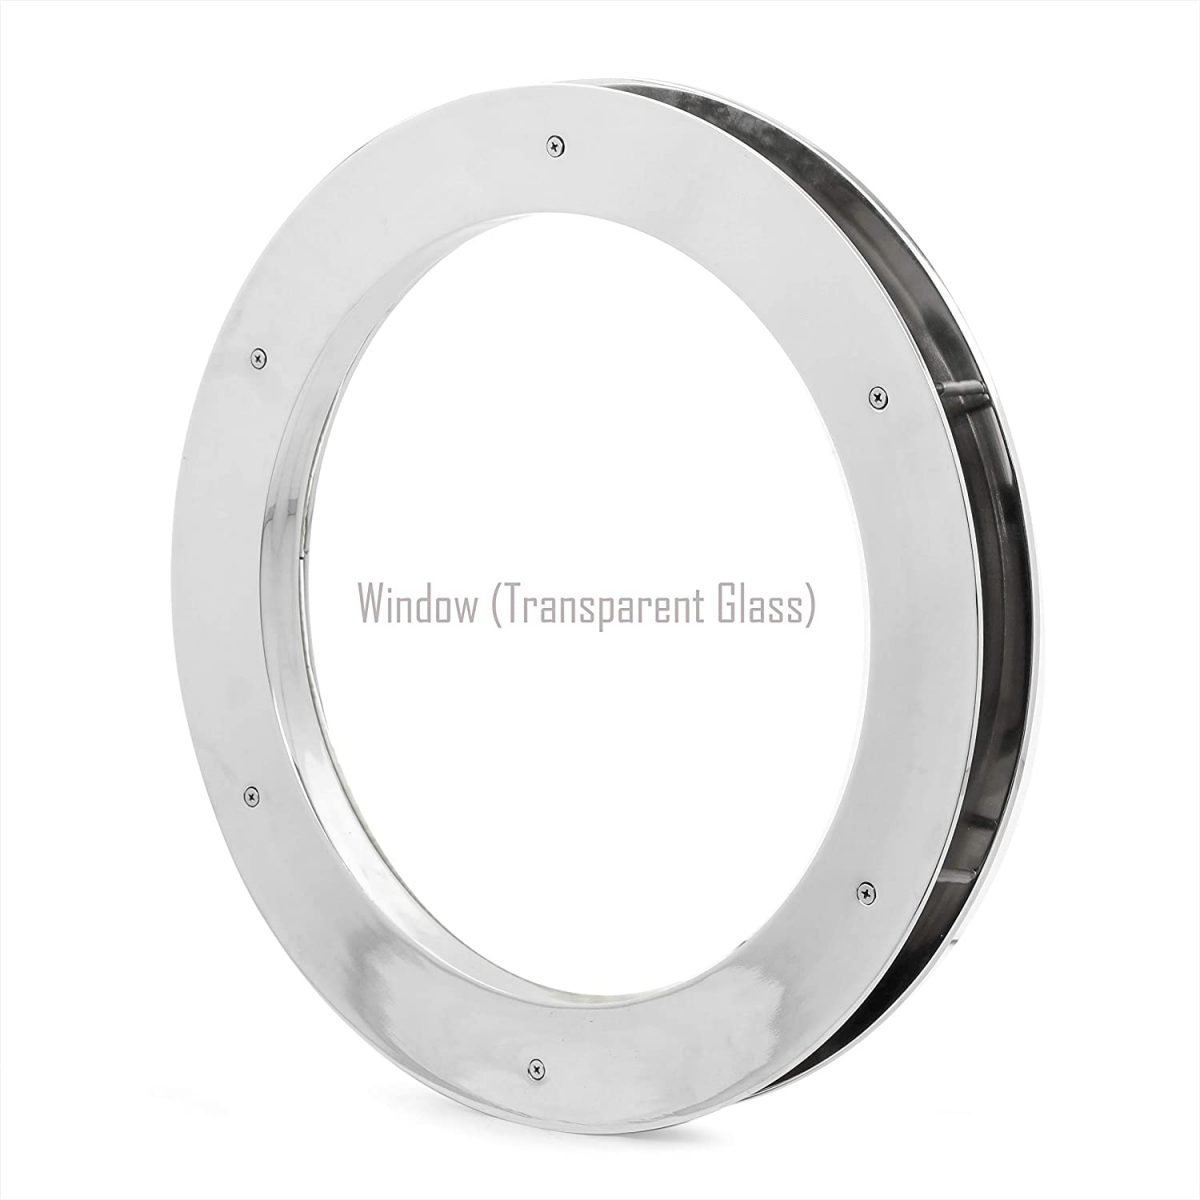 Deep Flange Nickel Premium Aluminum Premium Nautical Porthole Window with A Transparent Glass | Kitchen Home Decor Porthole Window | Nagina International (Nickel)